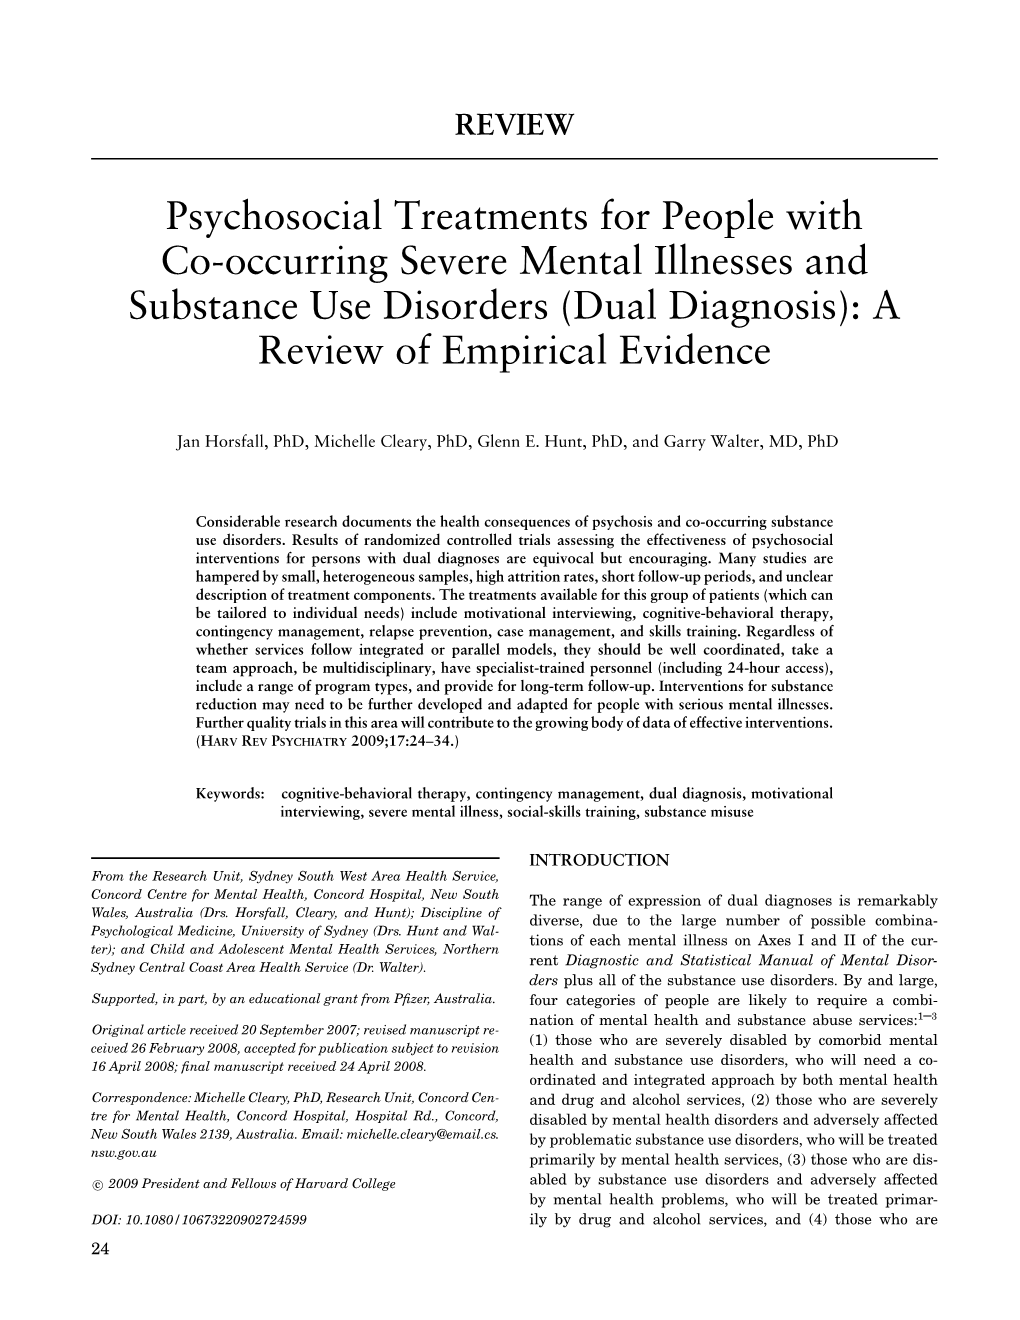 Dual Diagnosis): a Review of Empirical Evidence